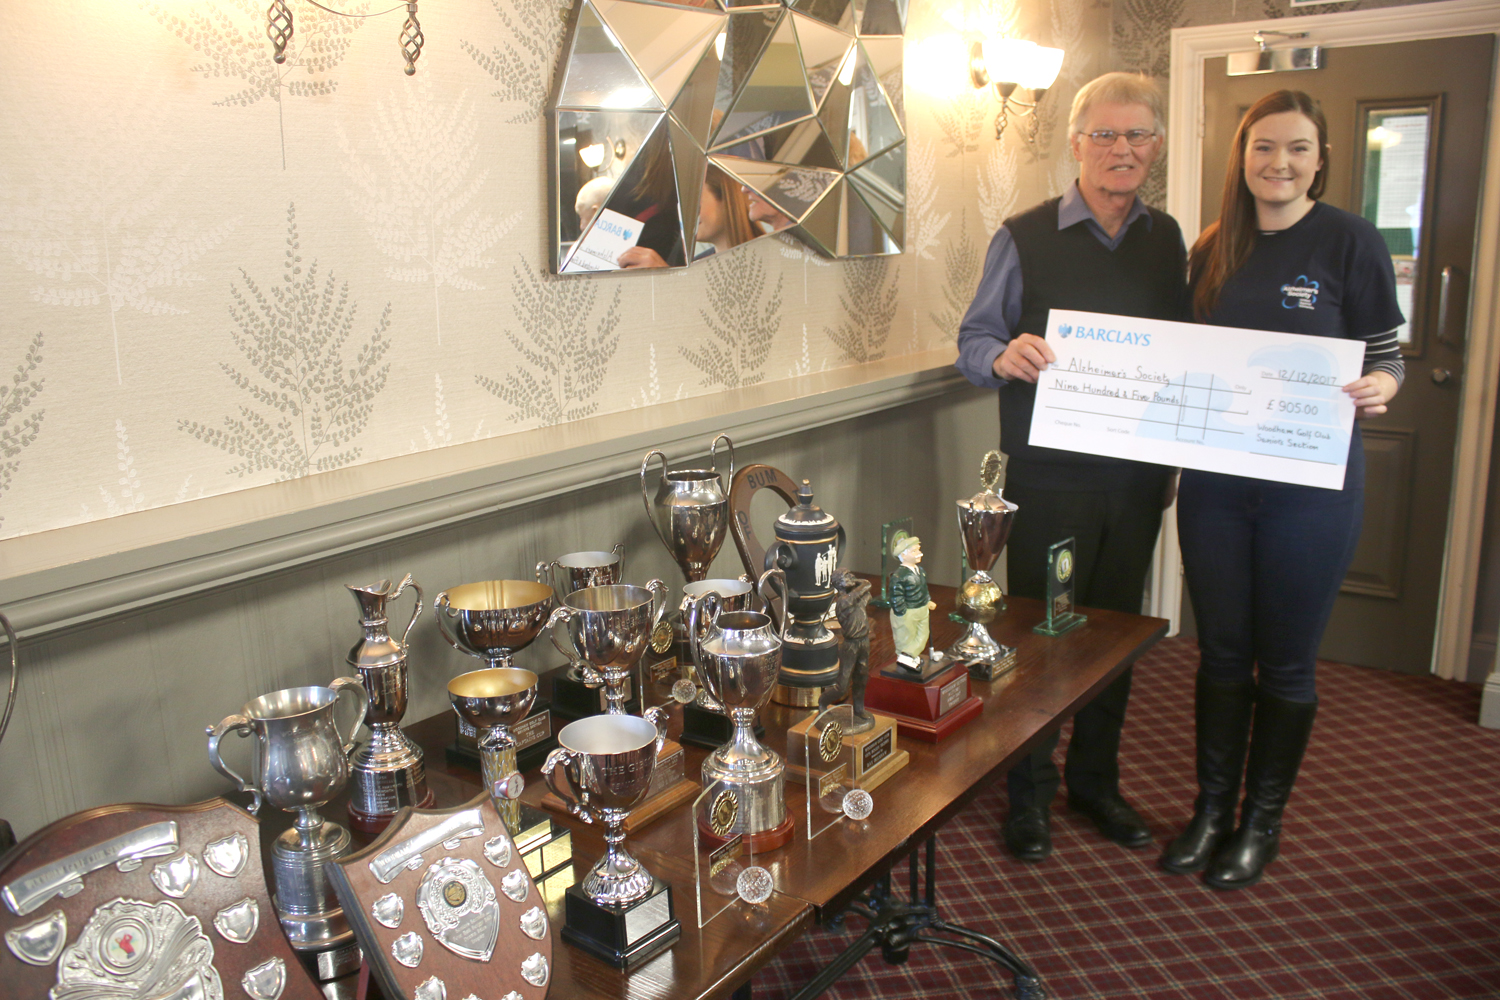 Woodham Golf Senior Section Donate £905